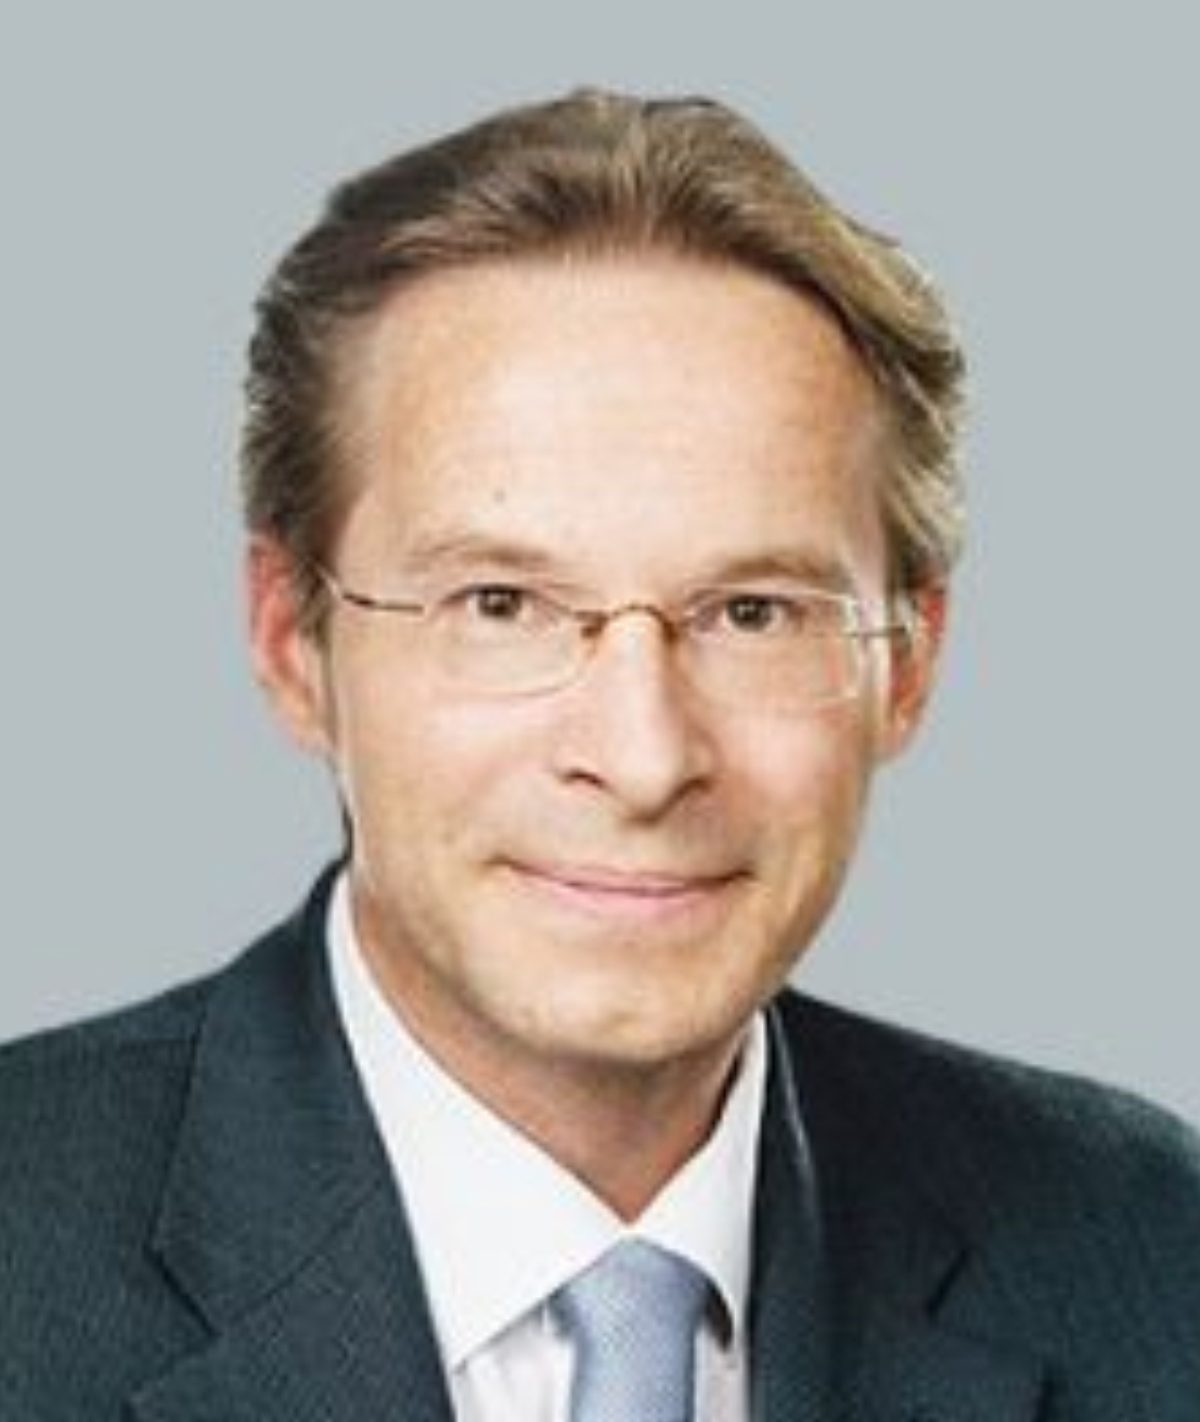 Univ. Prof. Dr. Andreas Gruber